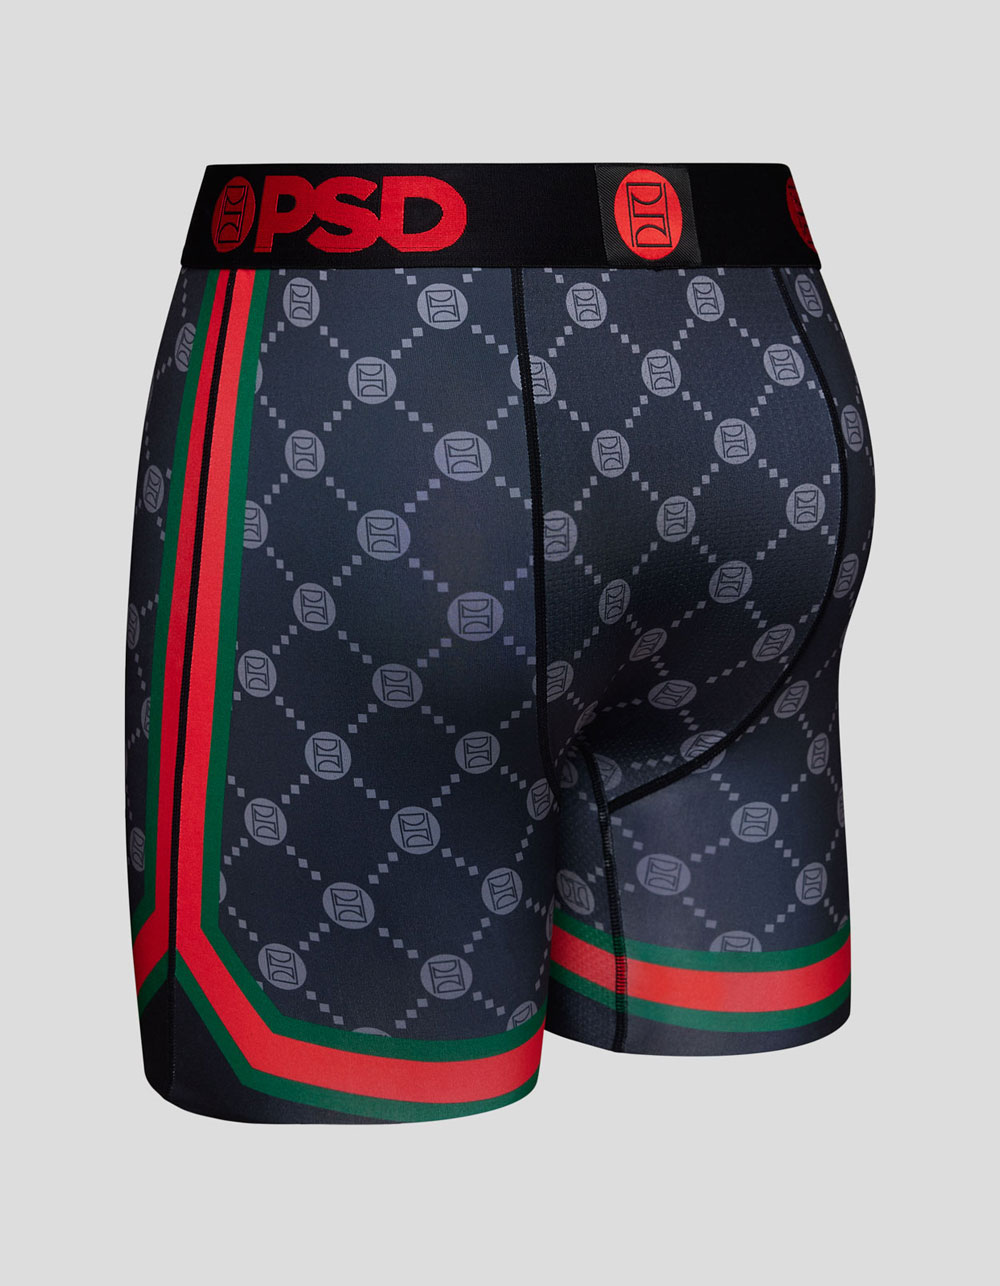 PSD Warface Emblem Mens Boxer Briefs - BLACK COMBO